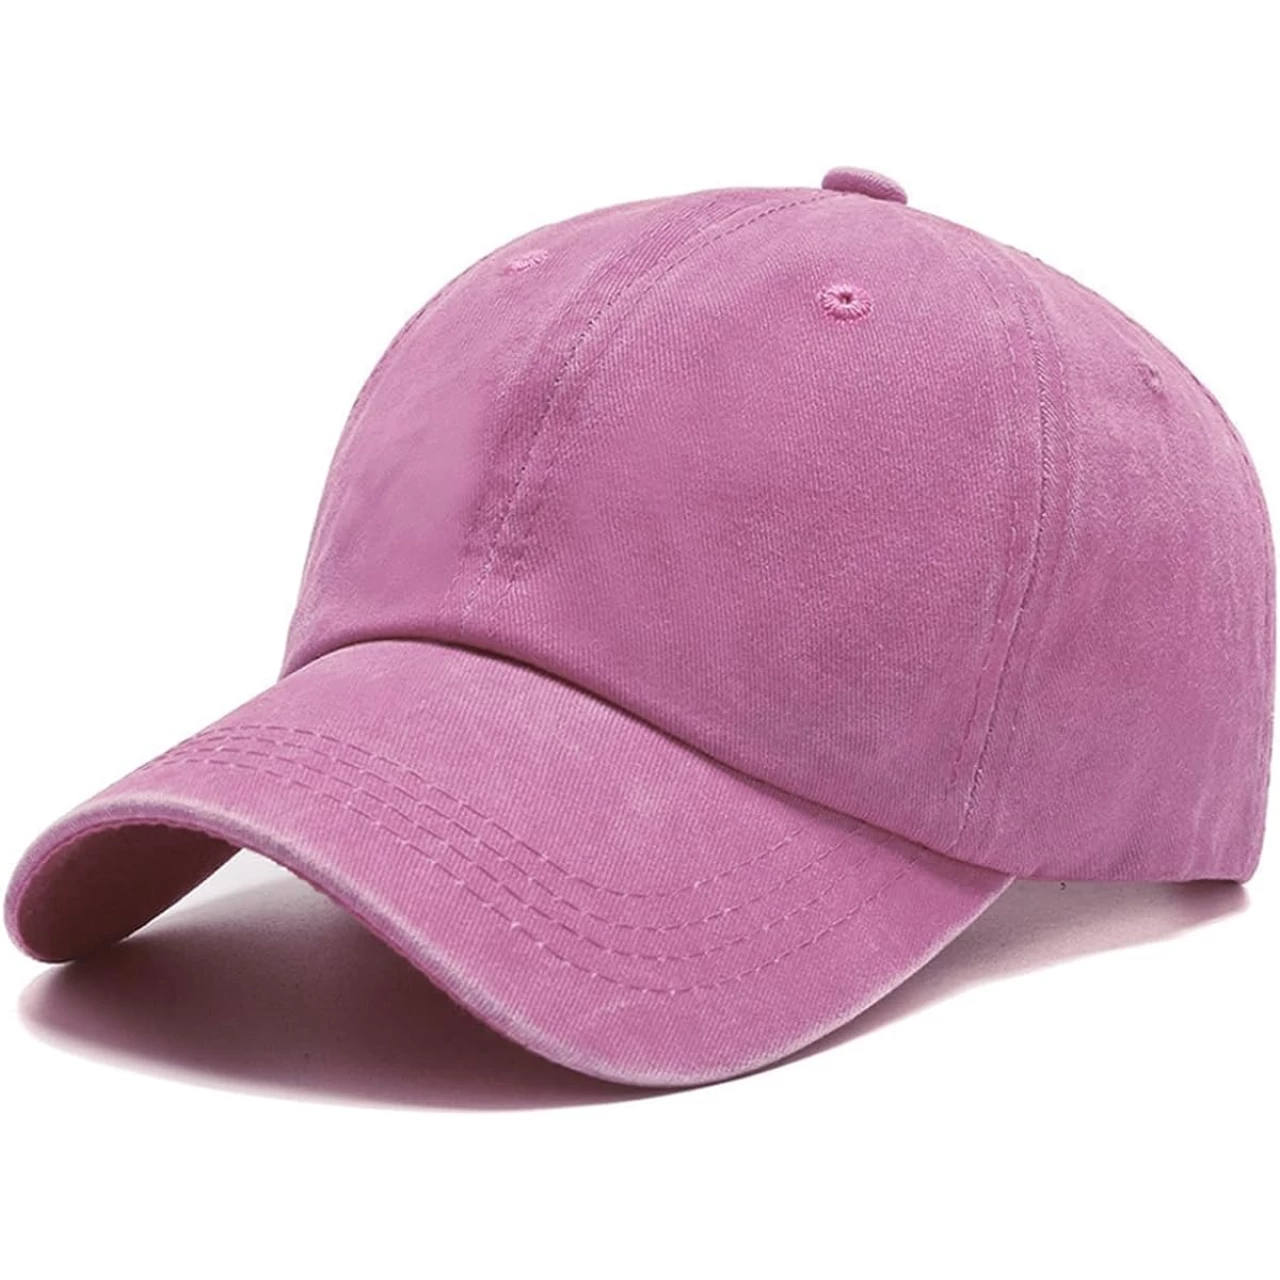 Baseball Sun Hats Summer Vintage Washed Distressed Baseball Cap Dad Golf Hat for Men Women